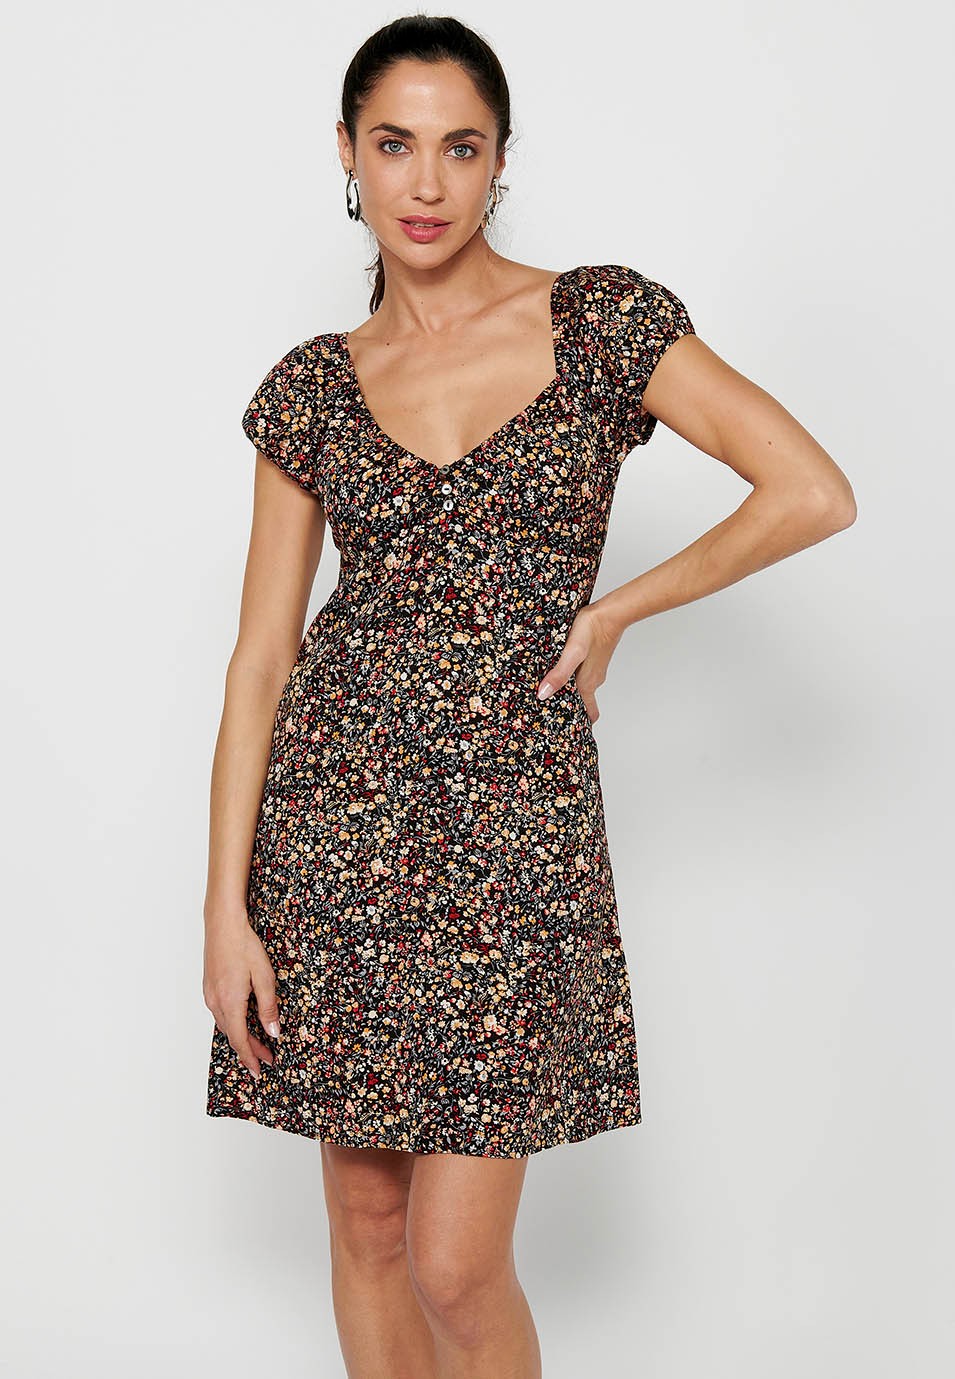 Damen-Kleid mit mehrfarbigem Blumendruck, kurzen Ärmeln, gerafftem Ausschnitt und Reißverschluss hinten 5